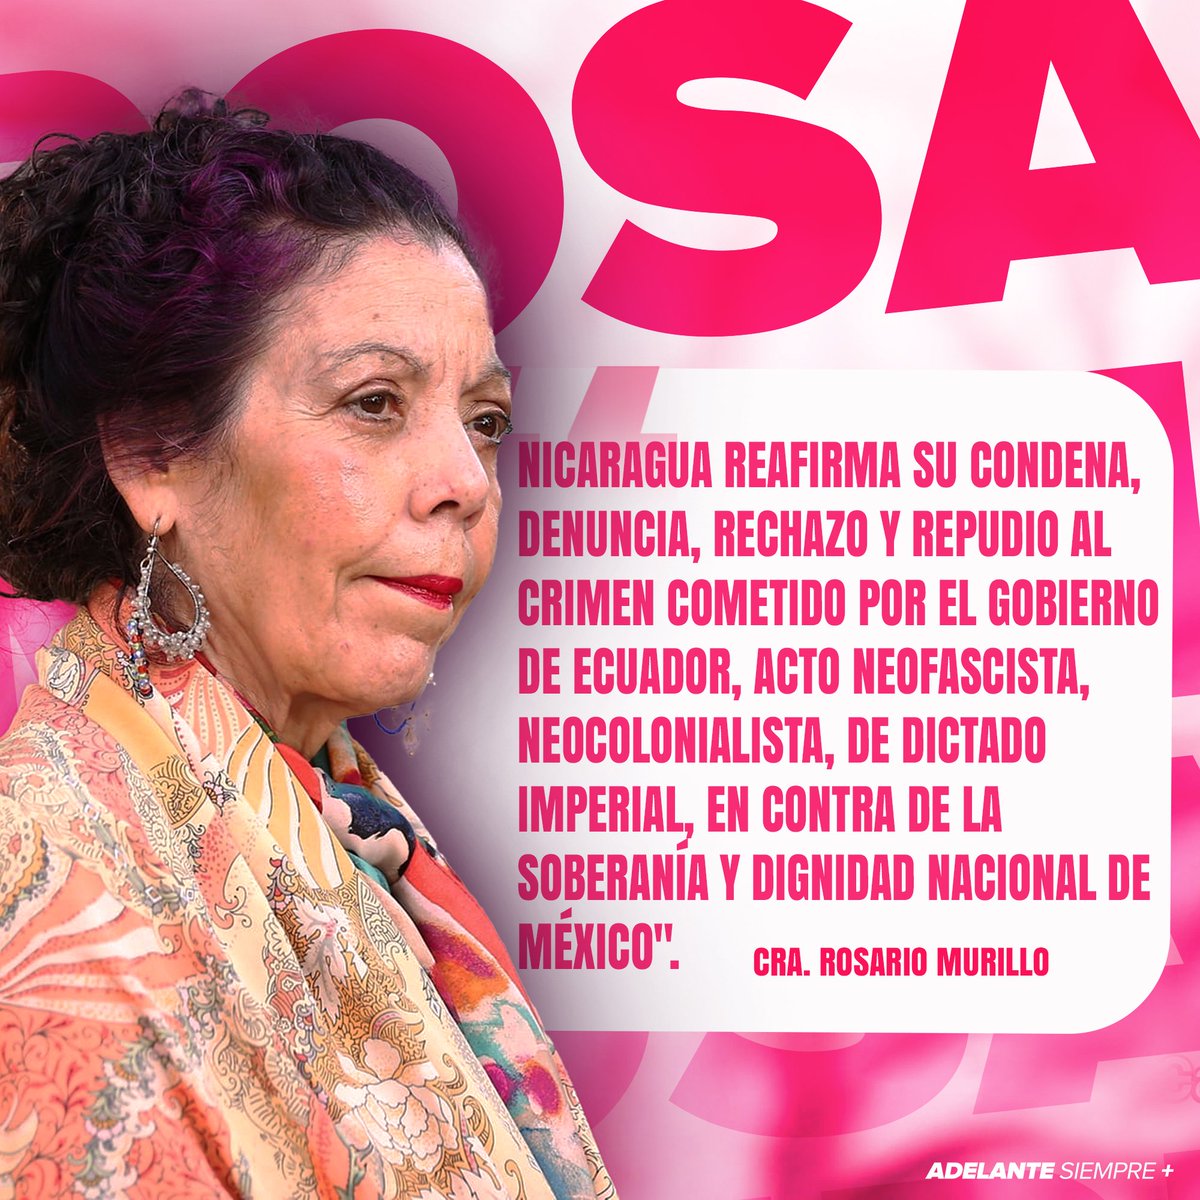 Compañera Vicepresidenta Rosario Murillo hoy 16 de #abril2024 ❤️🖤
#AdelanteSiempre
#4519LapatriaLaRevolución